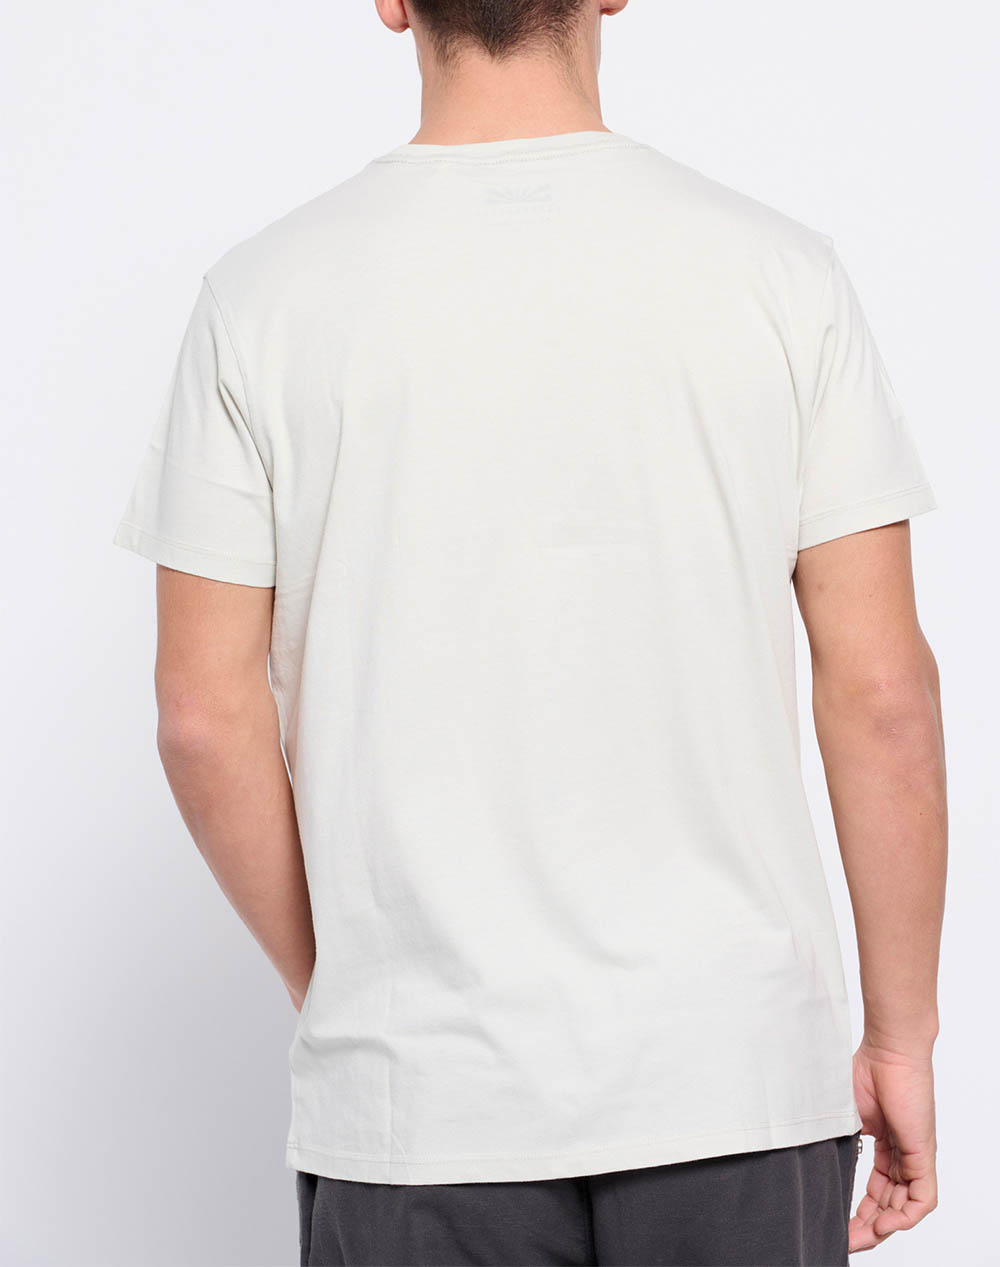 Organic cotton printed t-shirt